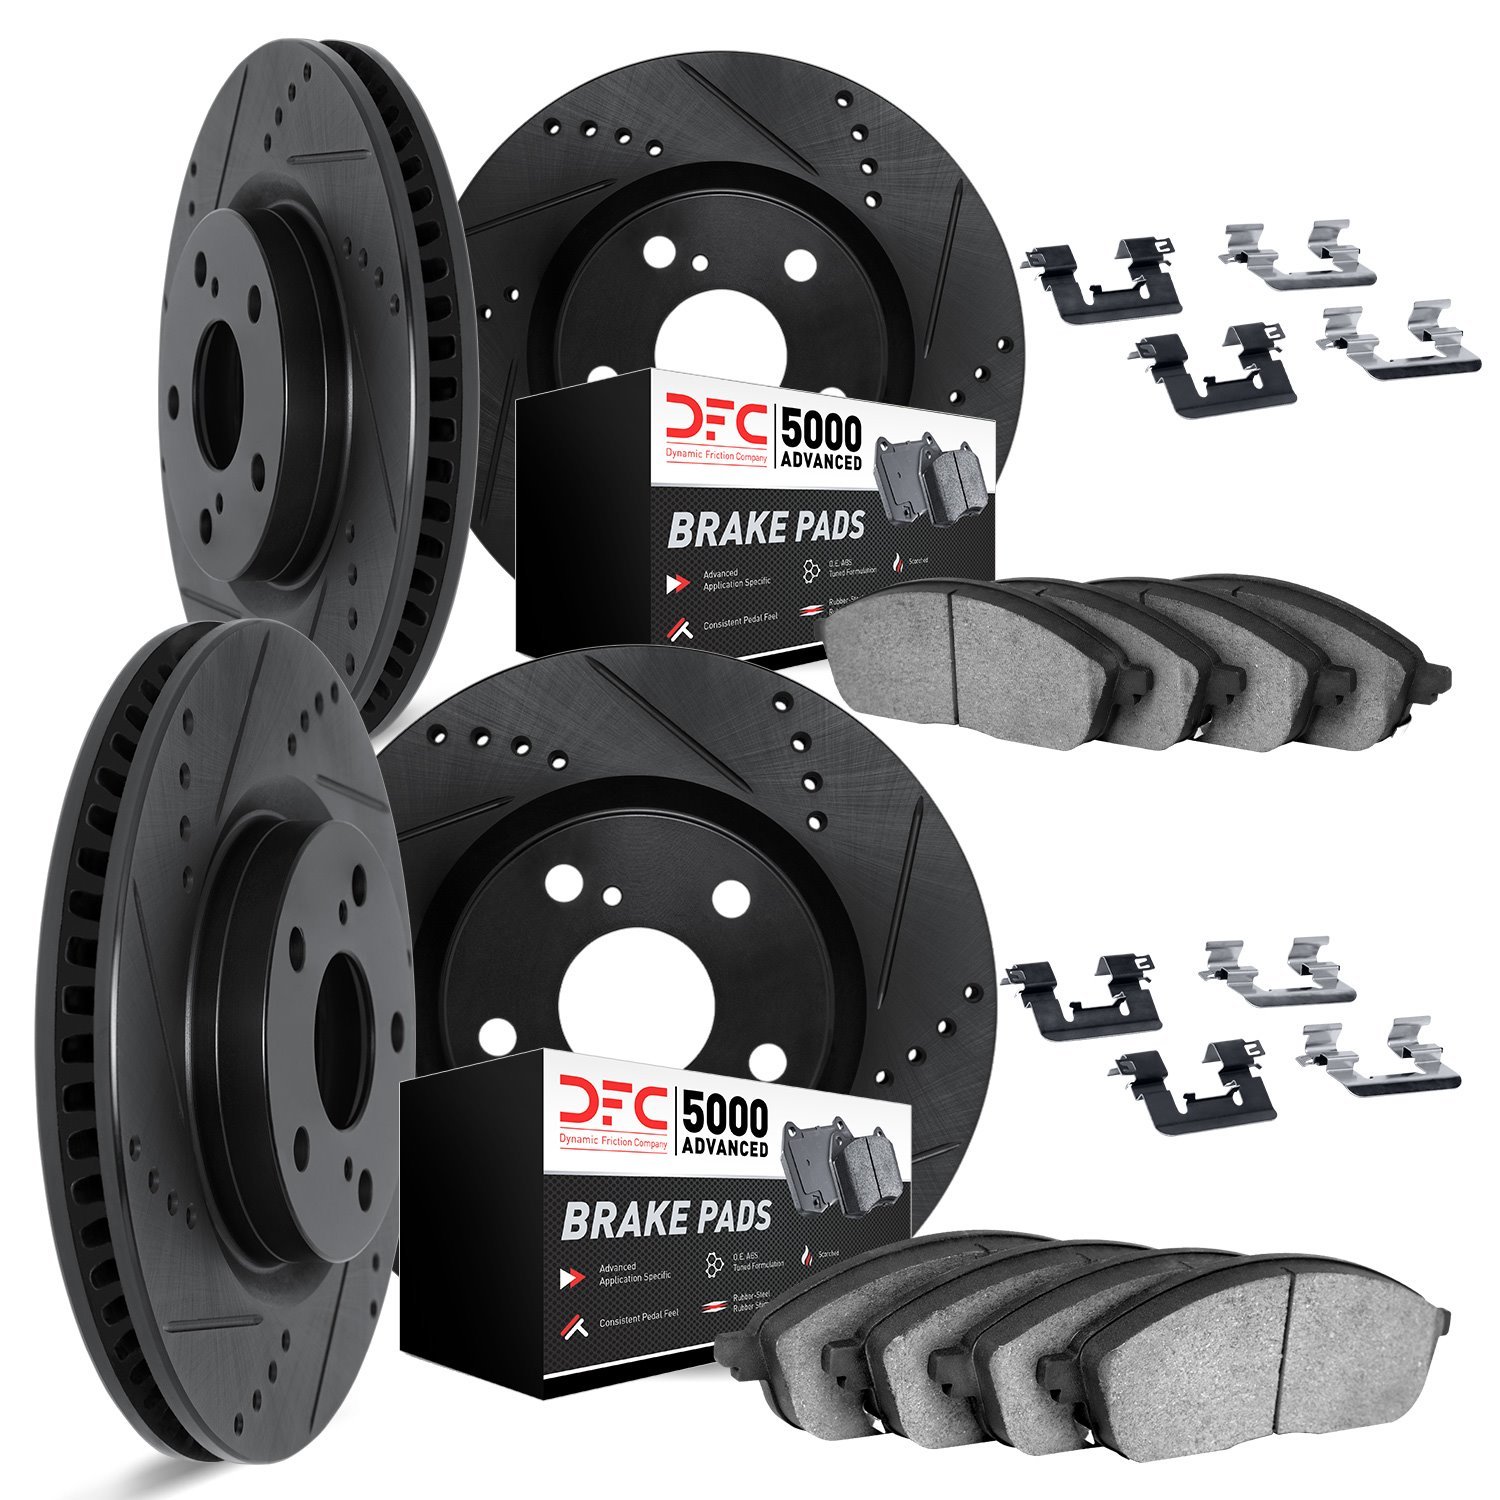 8514-42085 Drilled/Slotted Brake Rotors w/5000 Advanced Brake Pads Kit & Hardware [Black], Fits Select Mopar, Position: Front an